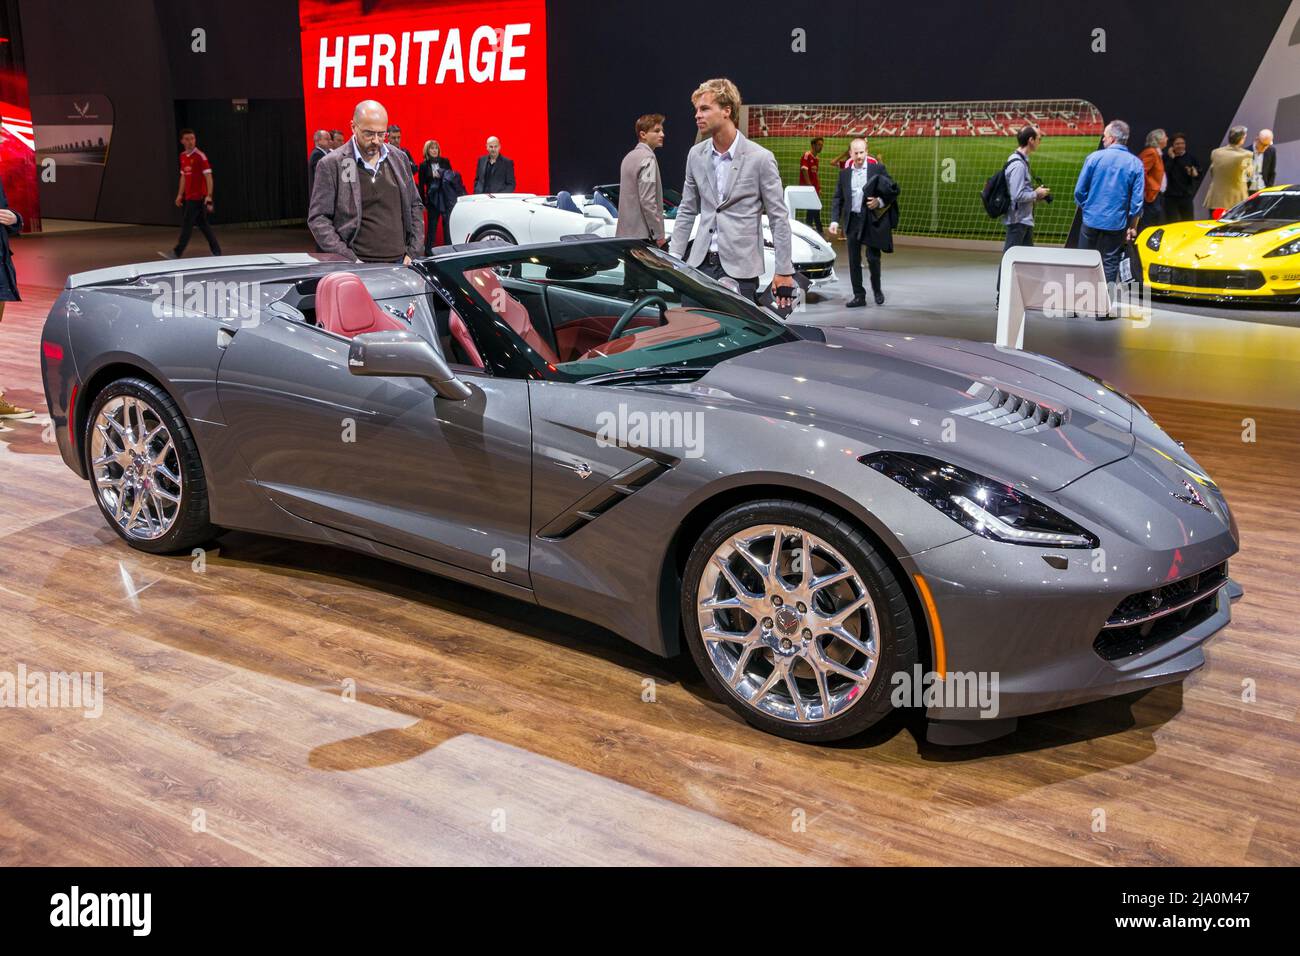 Chevrolet Corvette sports car showcased at the Geneva International Motor Show. Switzerland - March 2, 2016. Stock Photo